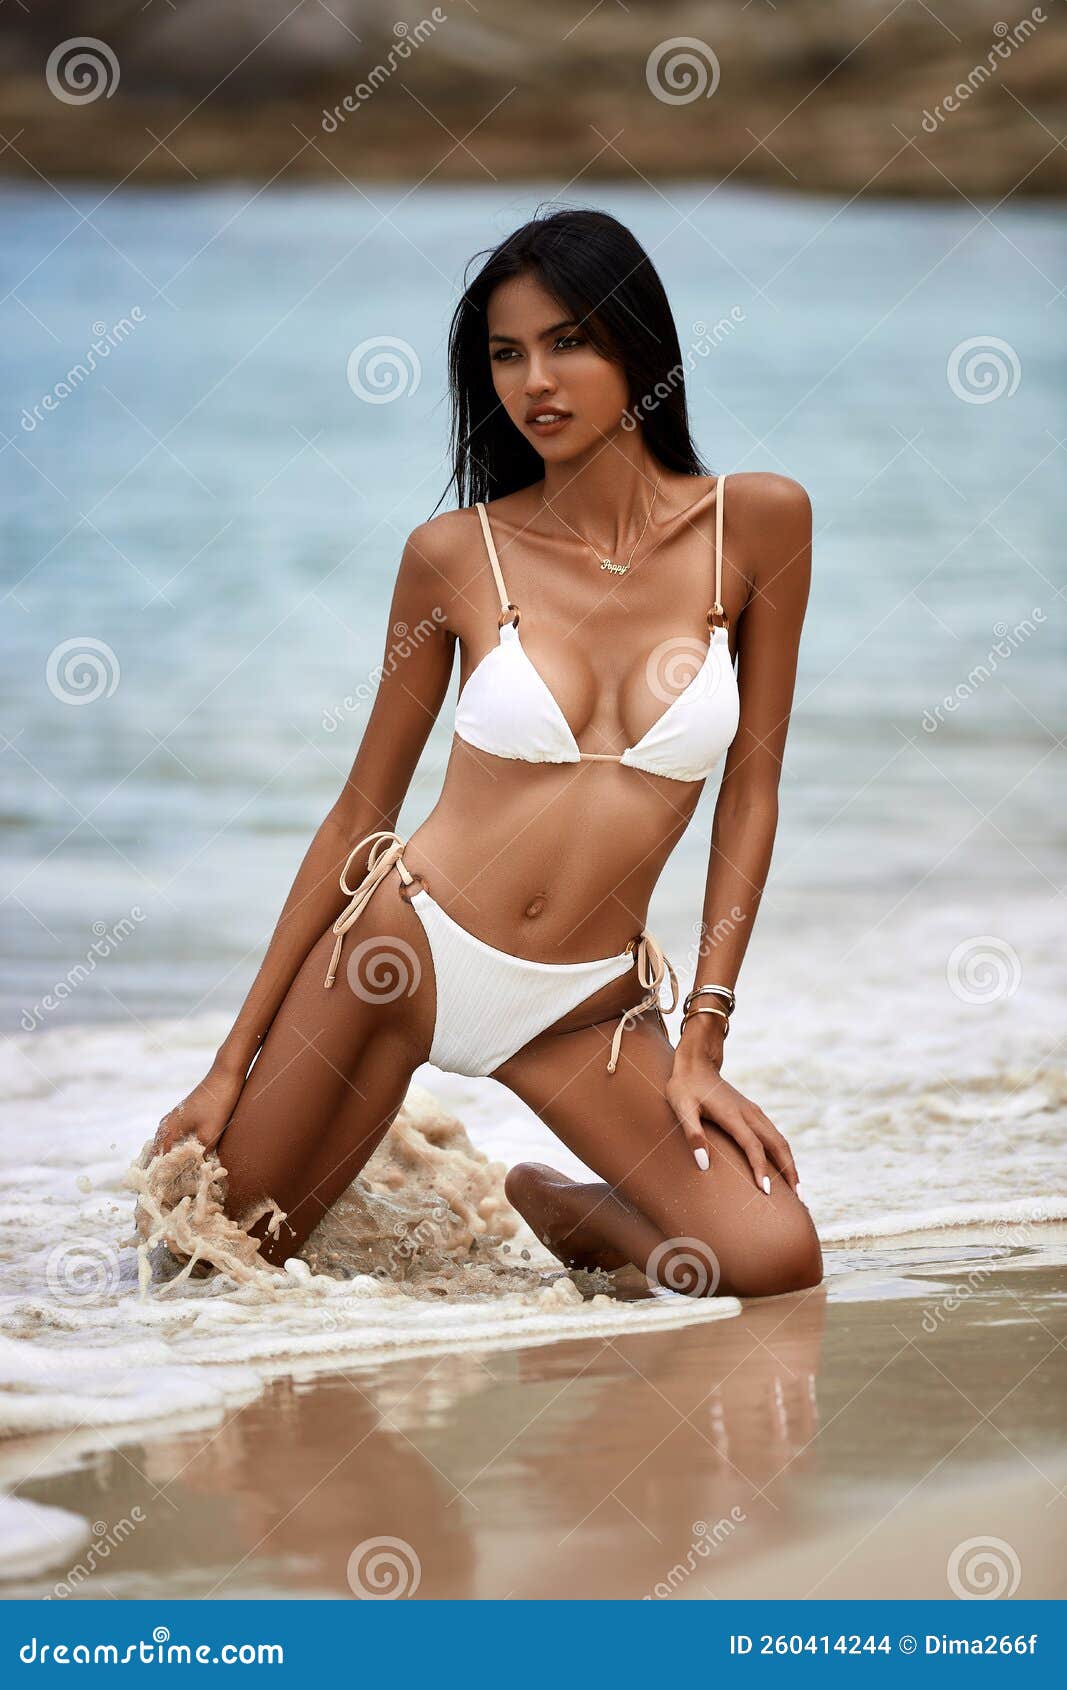 andrew micieli share pics of hot girls in bikini photos